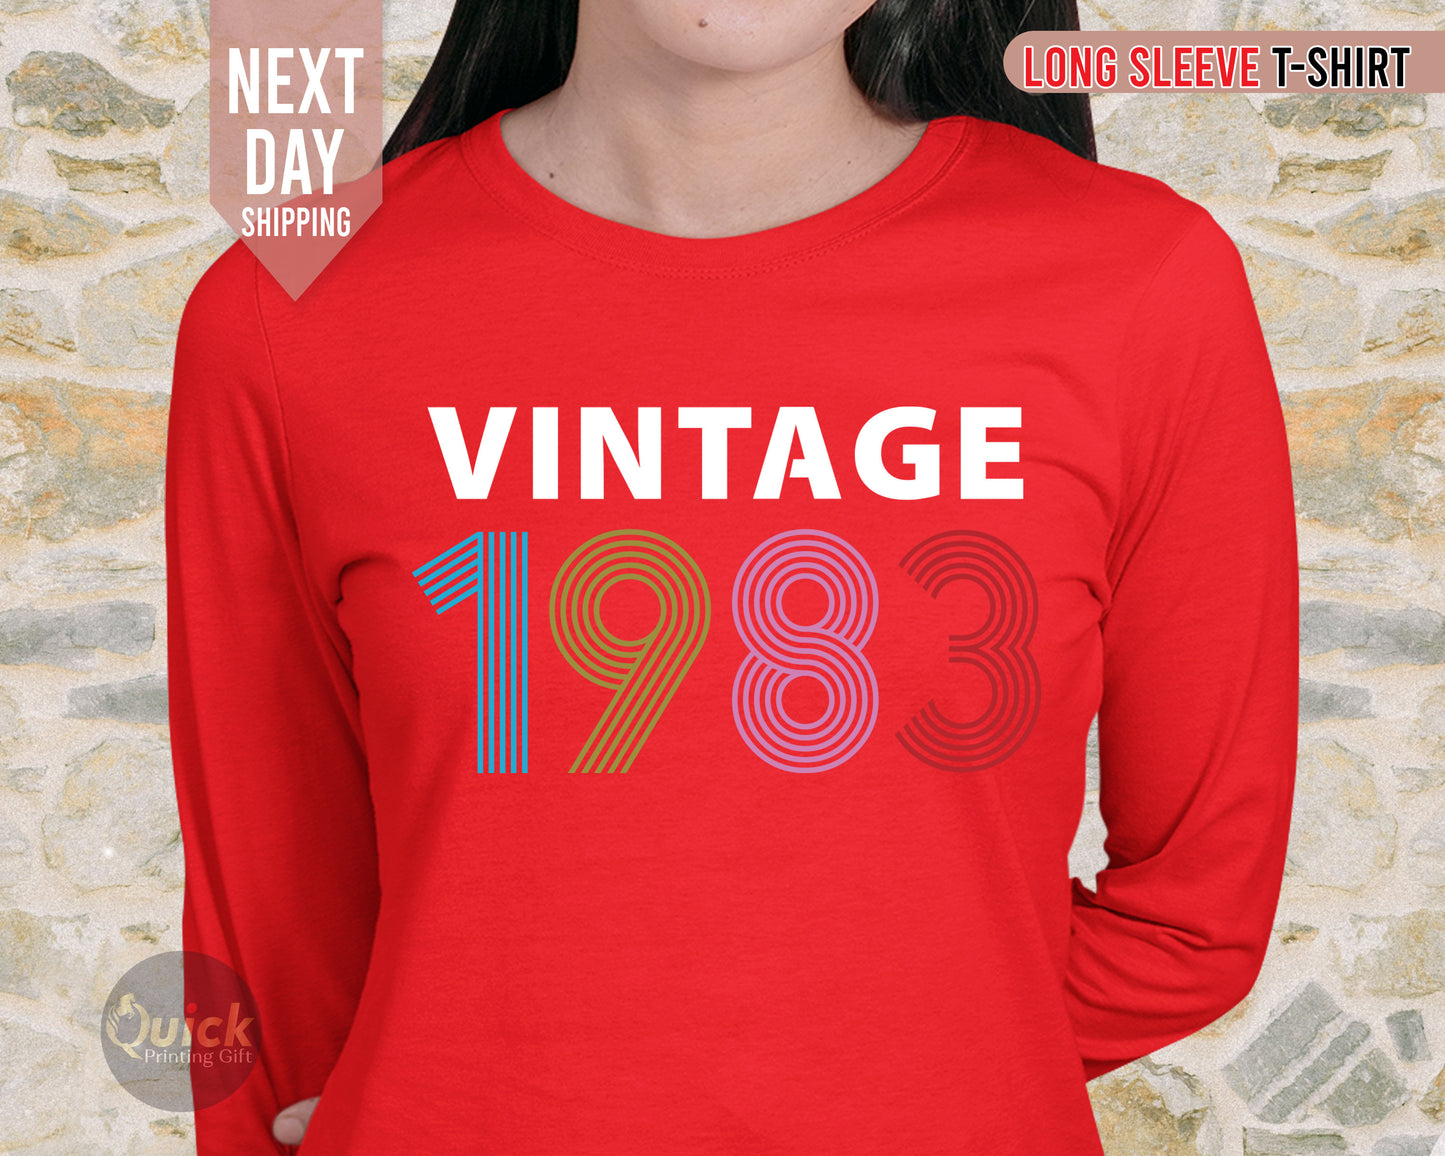 Vintage 1983 Long Sleeve T-Shirt